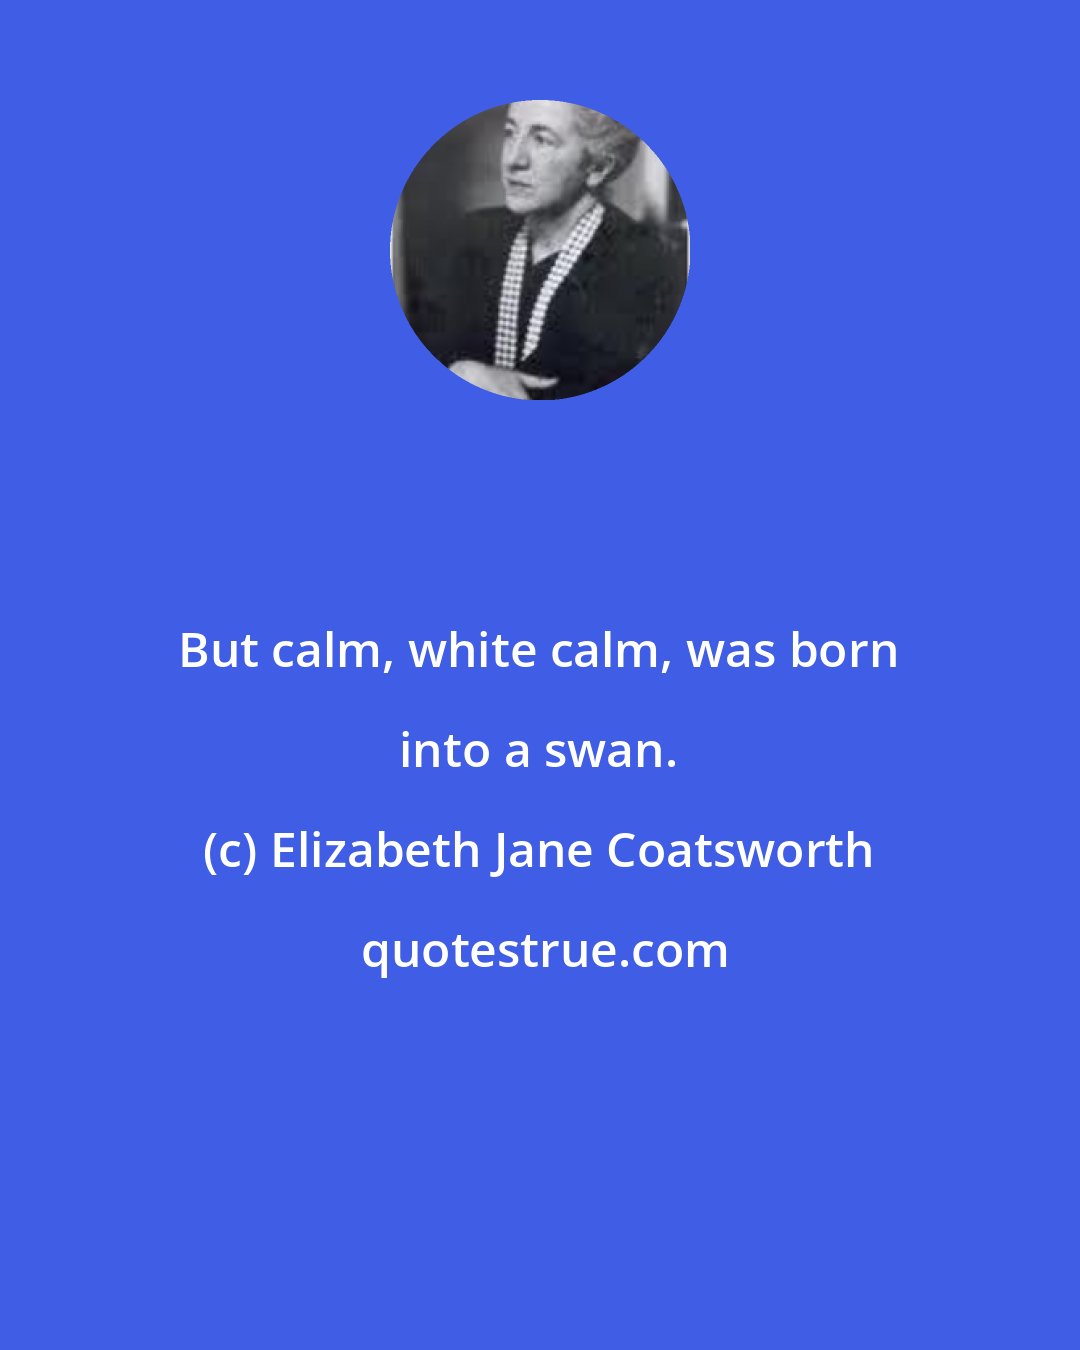 Elizabeth Jane Coatsworth: But calm, white calm, was born into a swan.